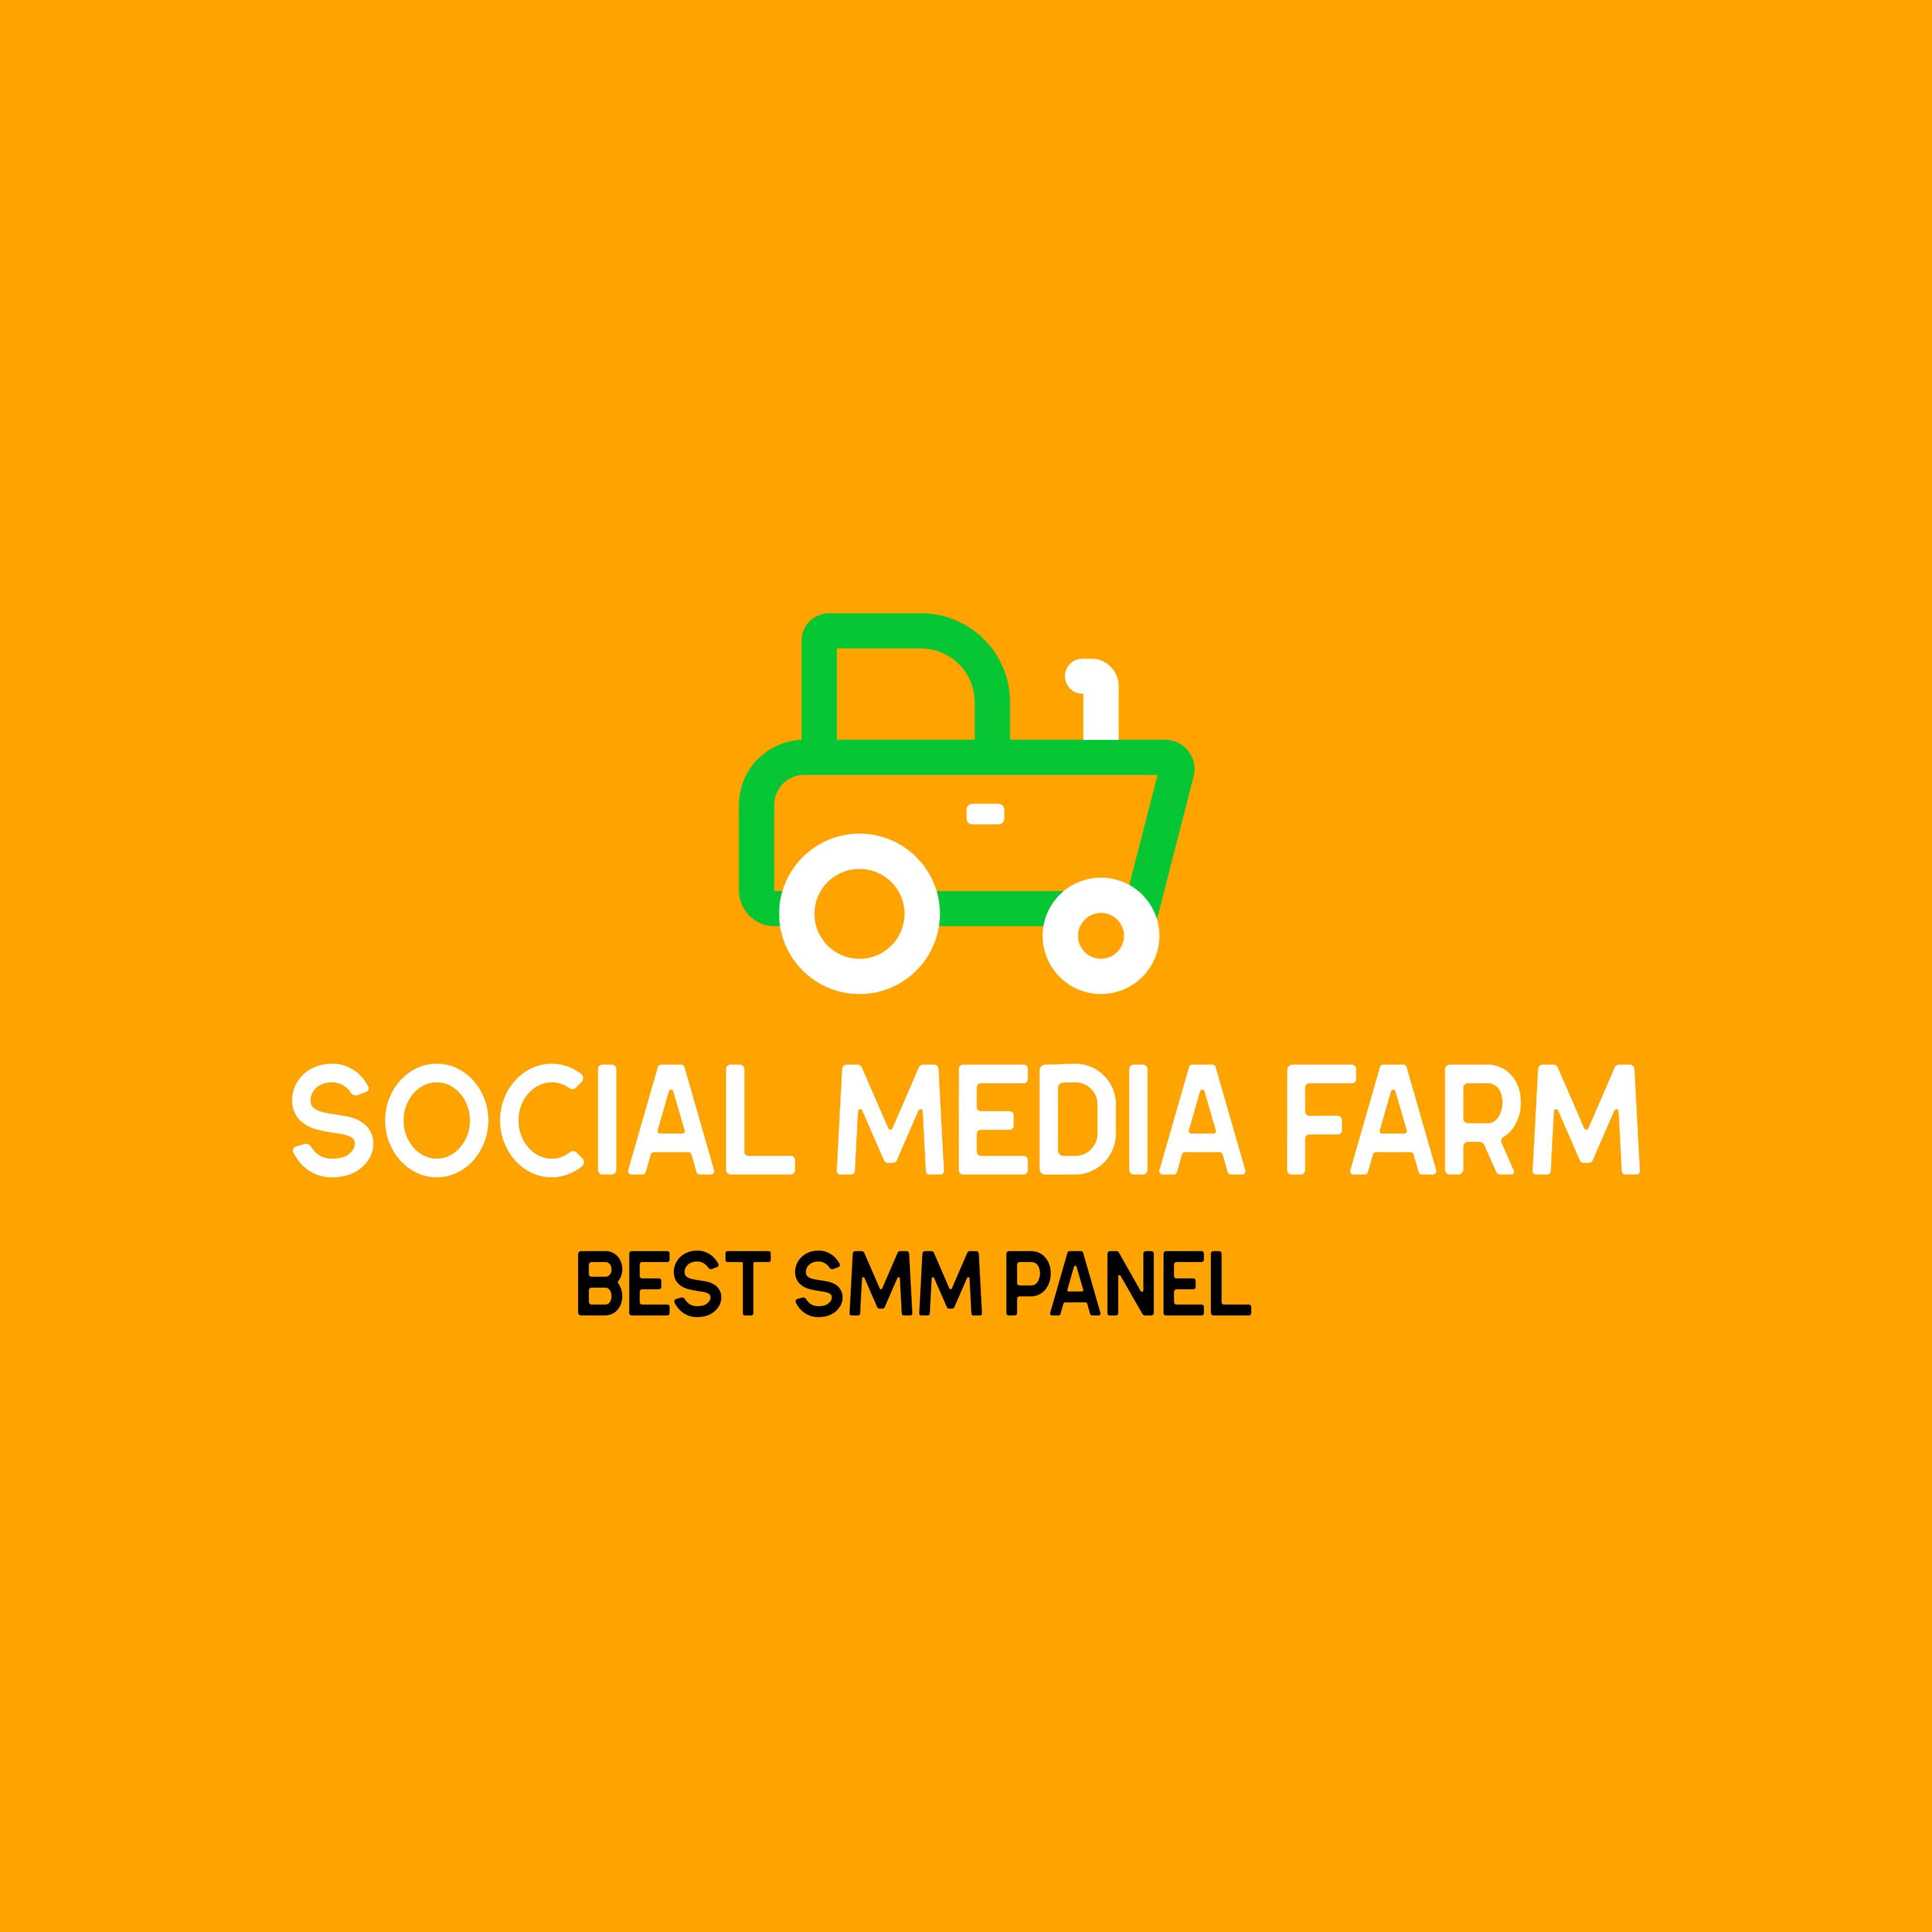 Social Media Farm Introduces Stellar Social Media Marketing Services Across the Globe